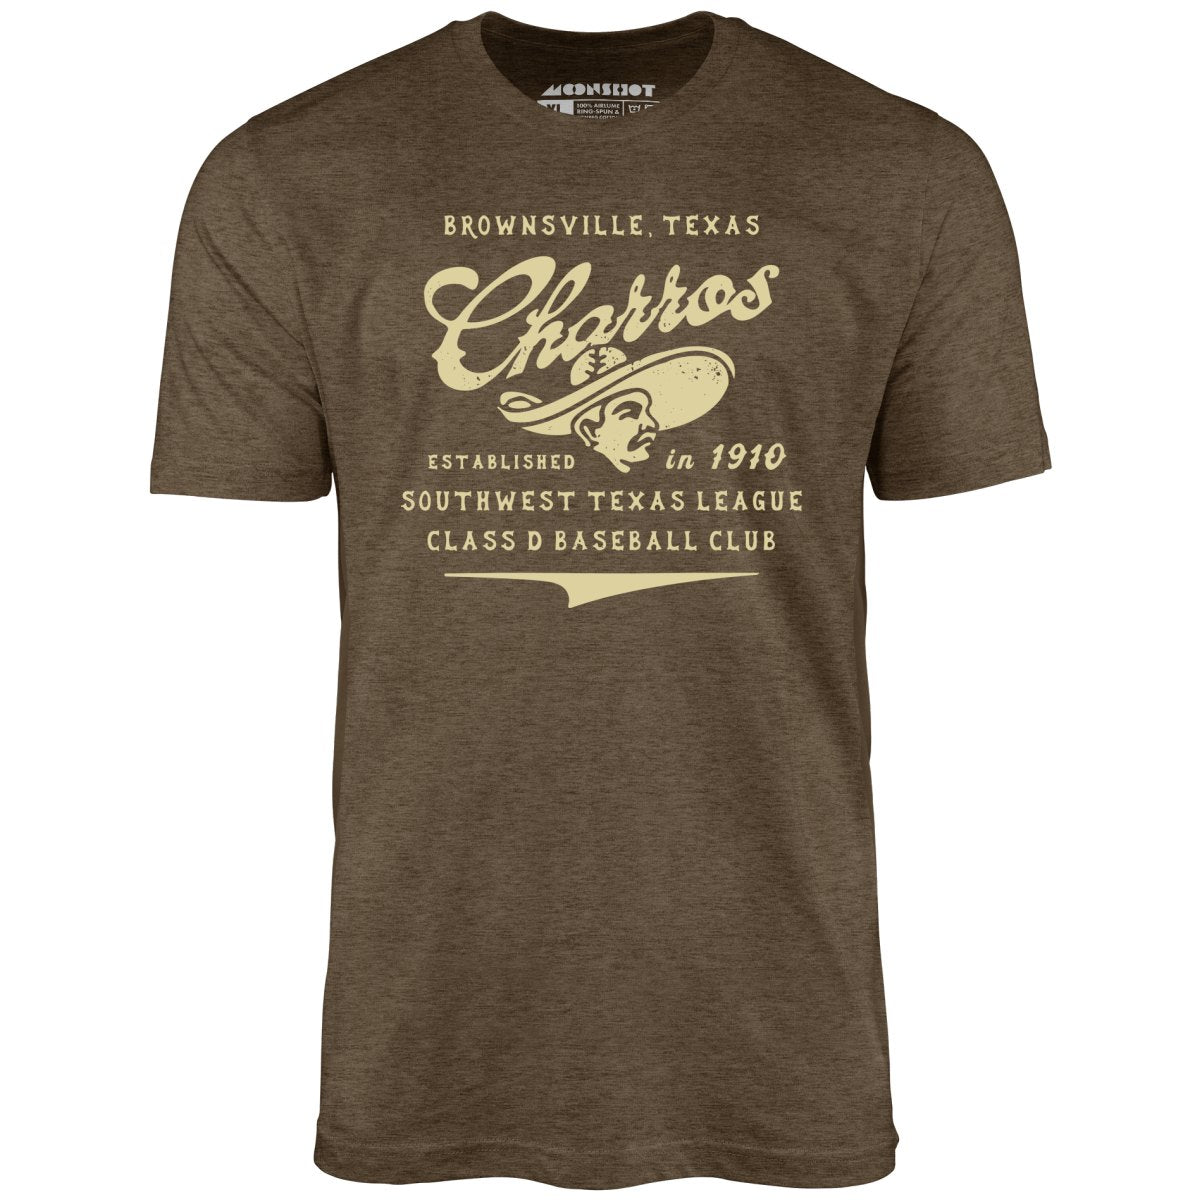 Brownsville Charros - Texas - Vintage Defunct Baseball Teams - Unisex T-Shirt